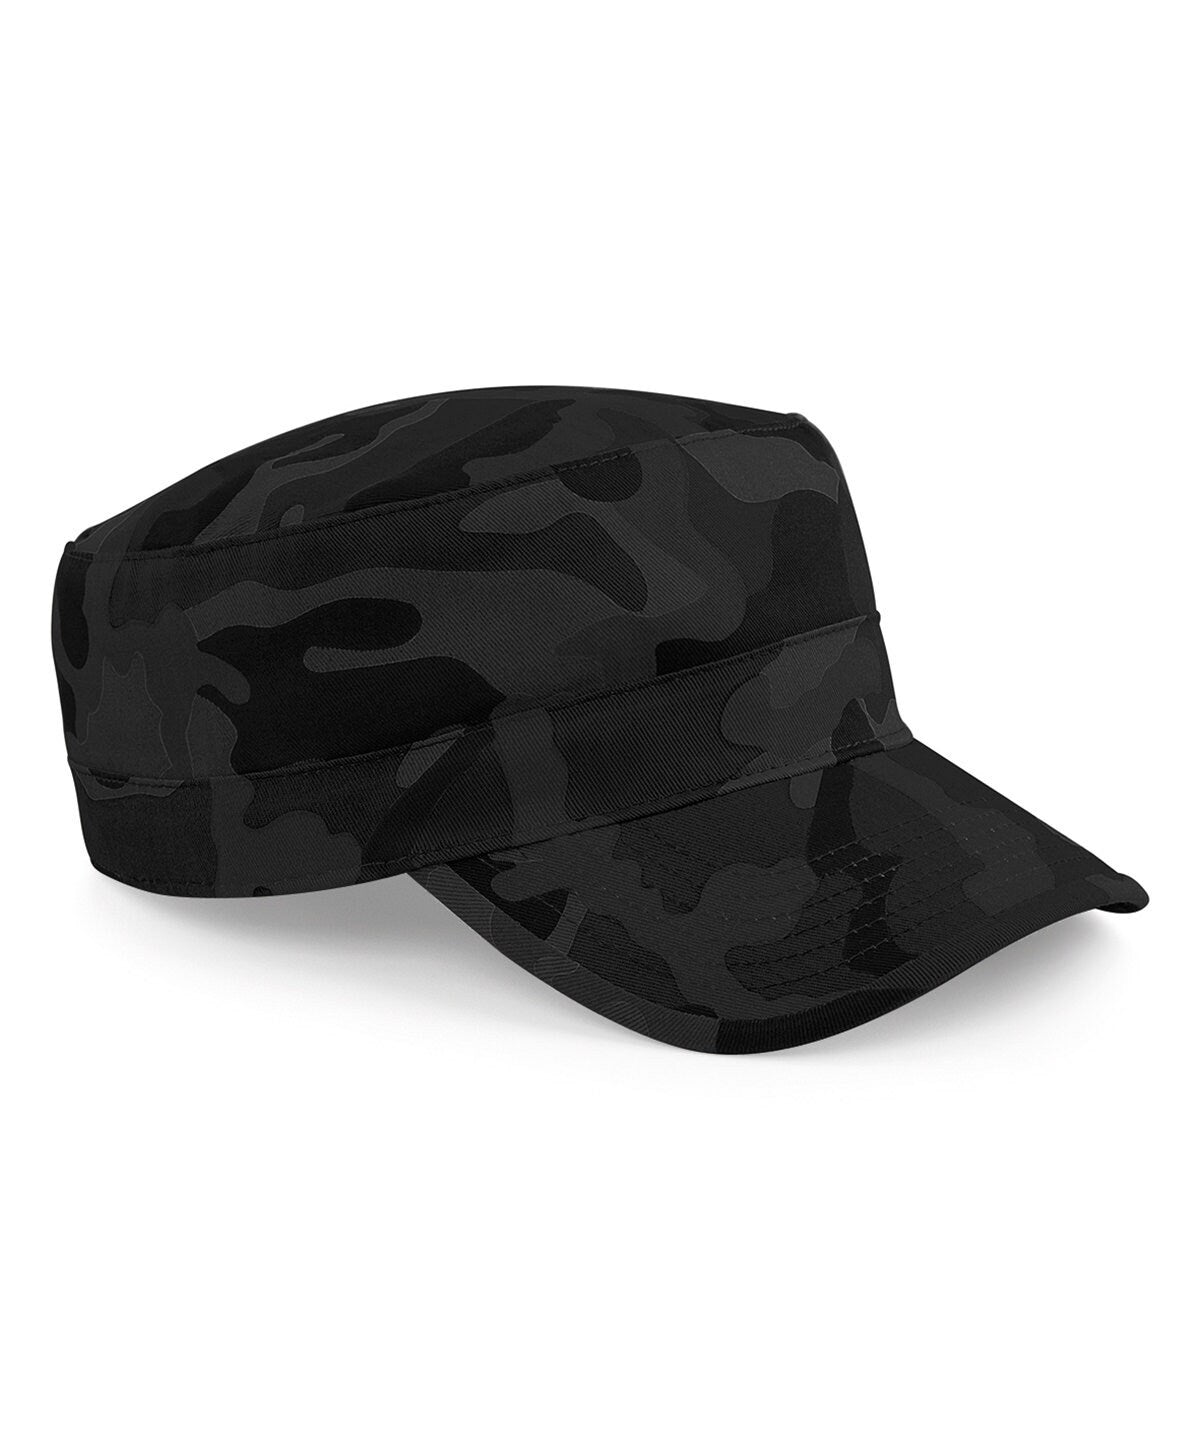 Camouflage Army Cap - Camo Hat B33 Urban Military Field Jungle Beechfield Cotton